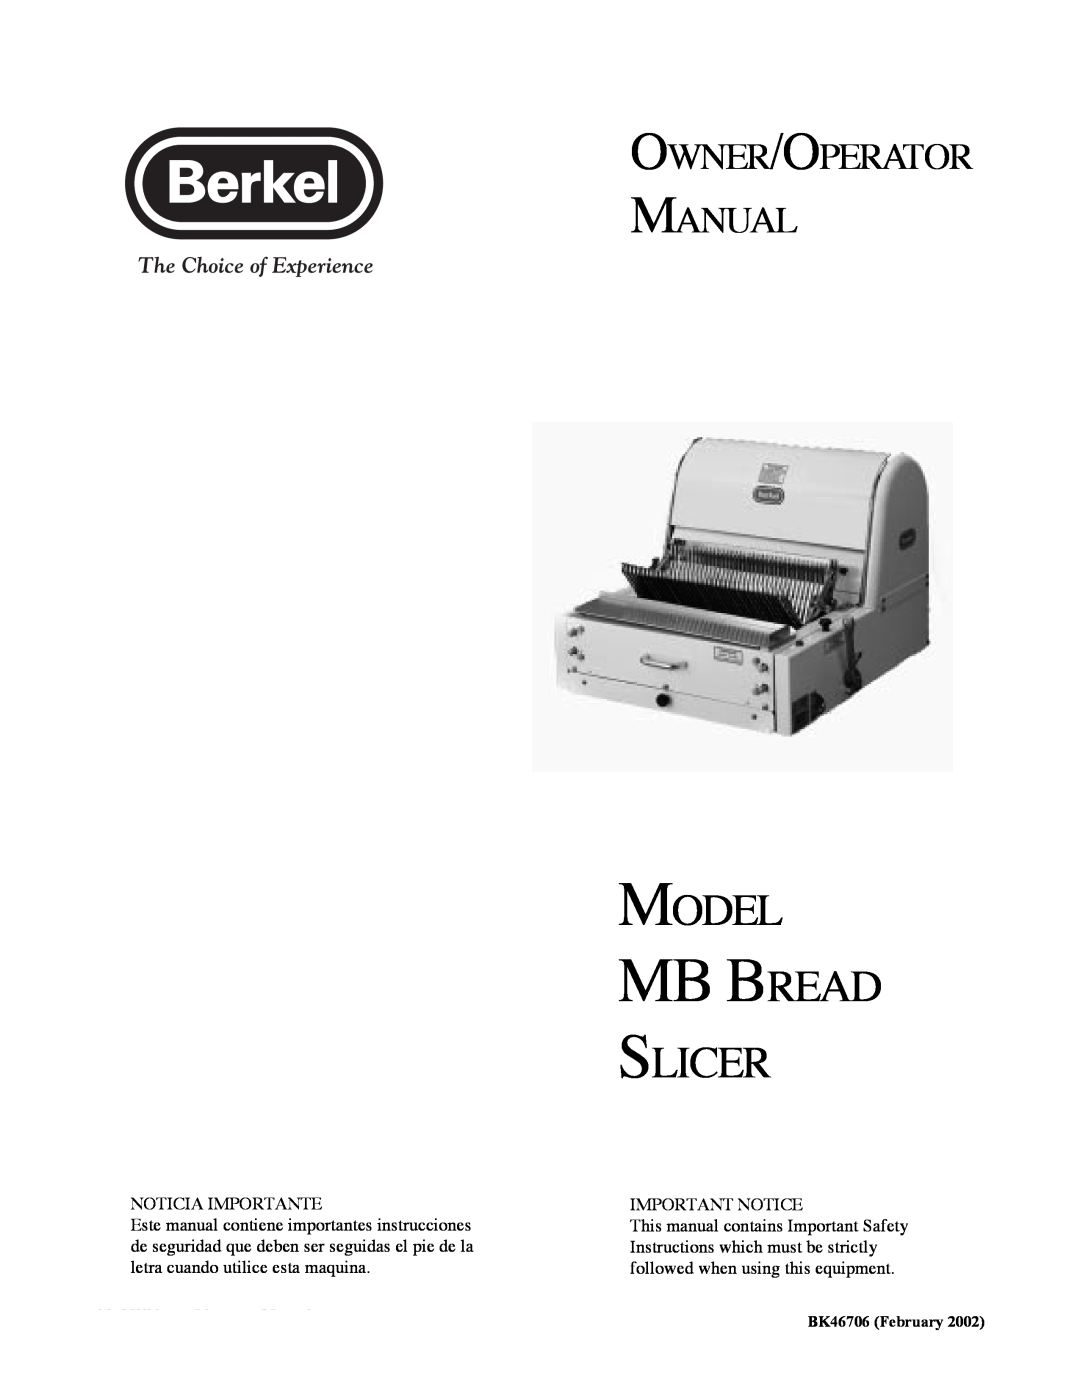 Berkel BK46706 important safety instructions Mb Bread, Model, Slicer, Owner/Operator Manual, Noticia Importante 